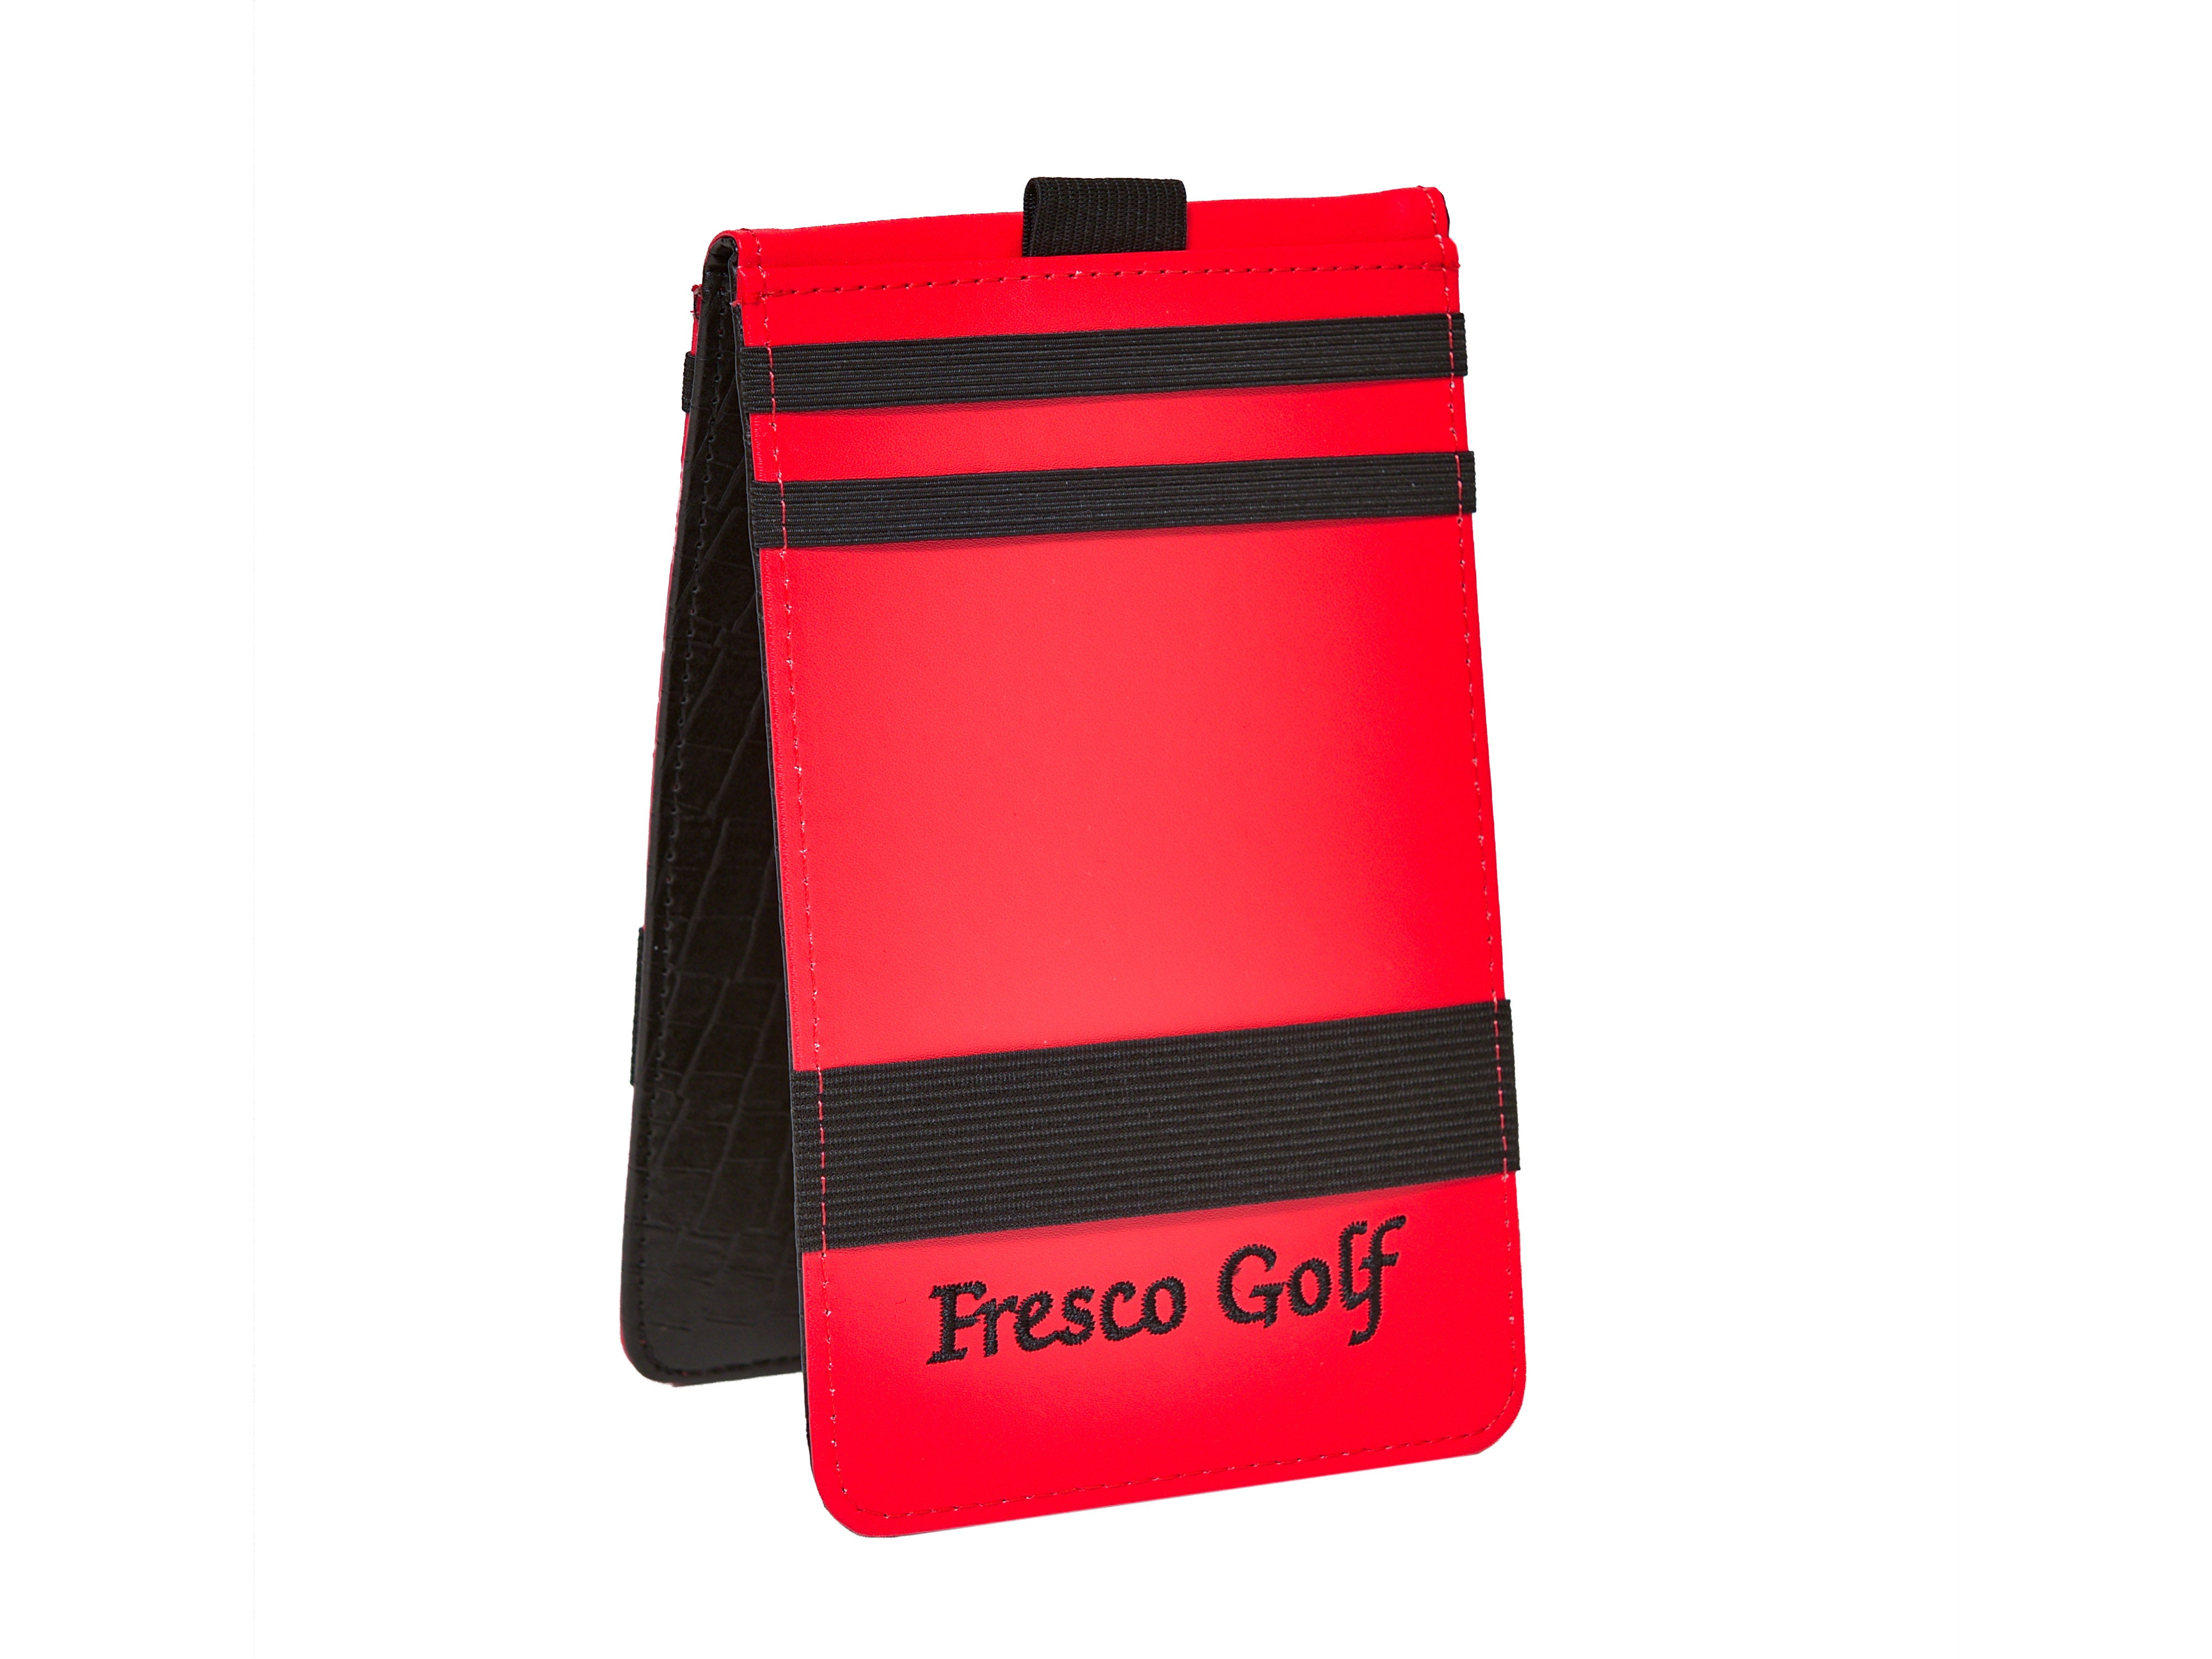 Fresco Golf Yardage Book Black